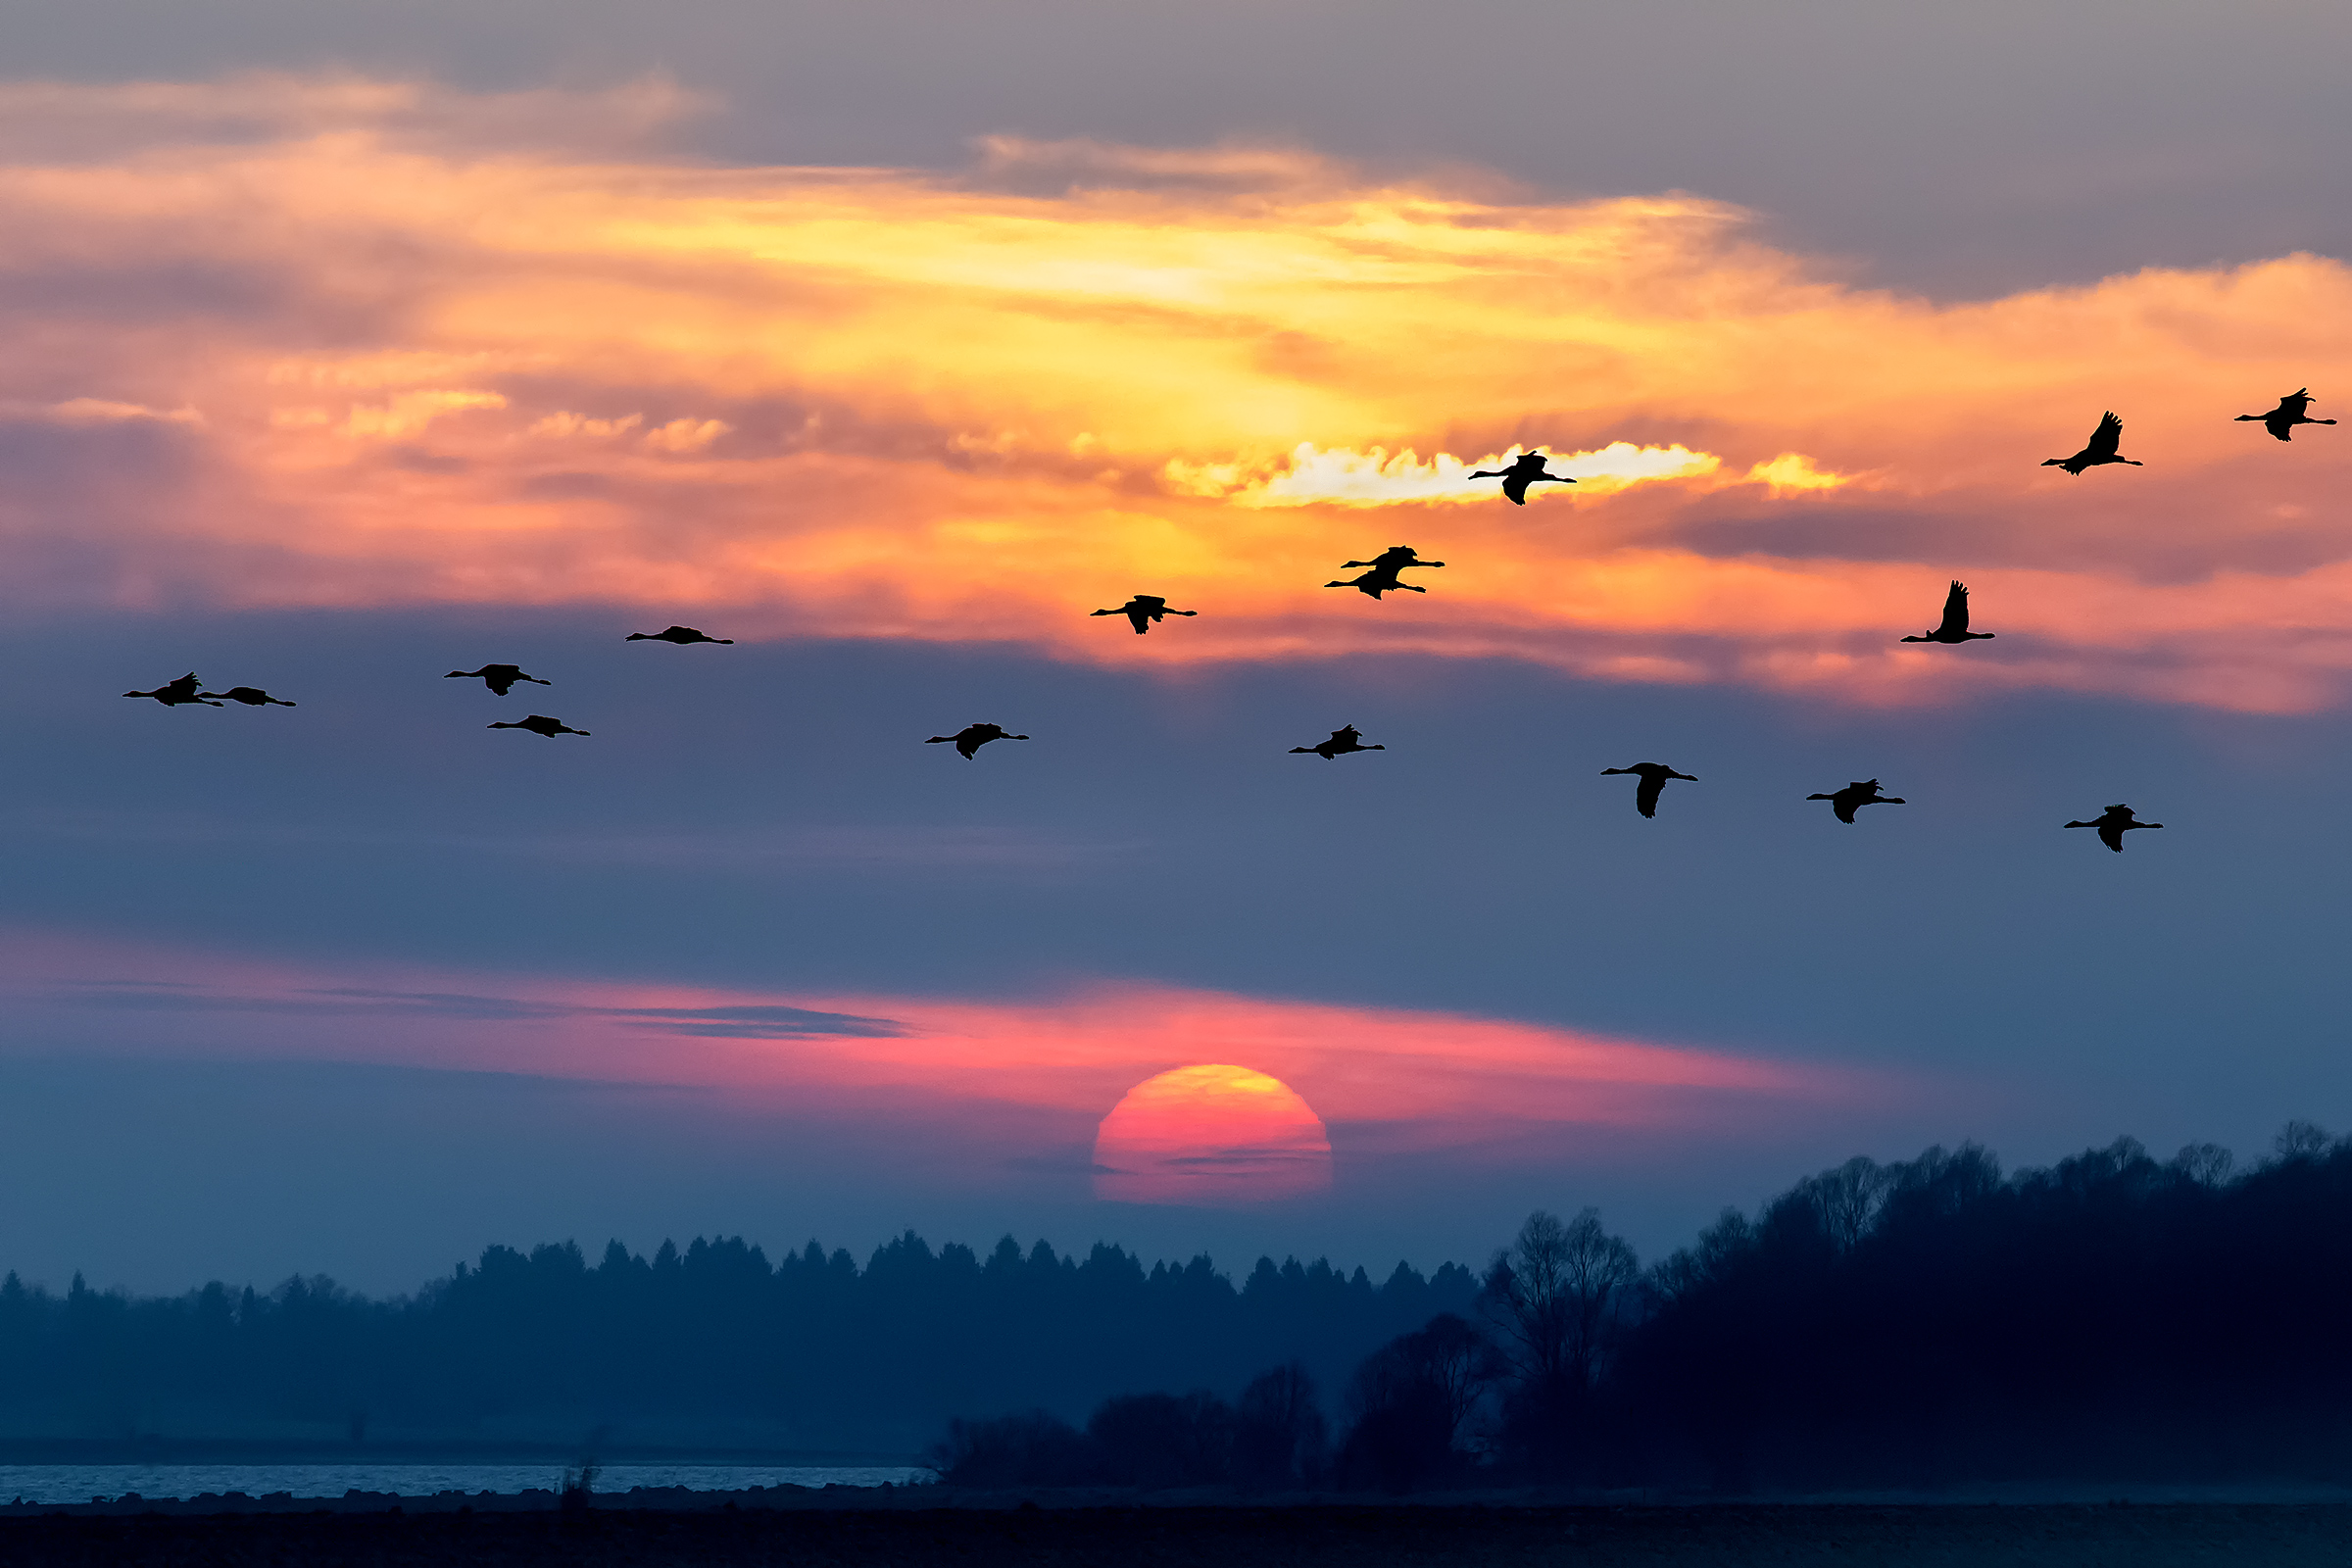 Cranes at sunset...